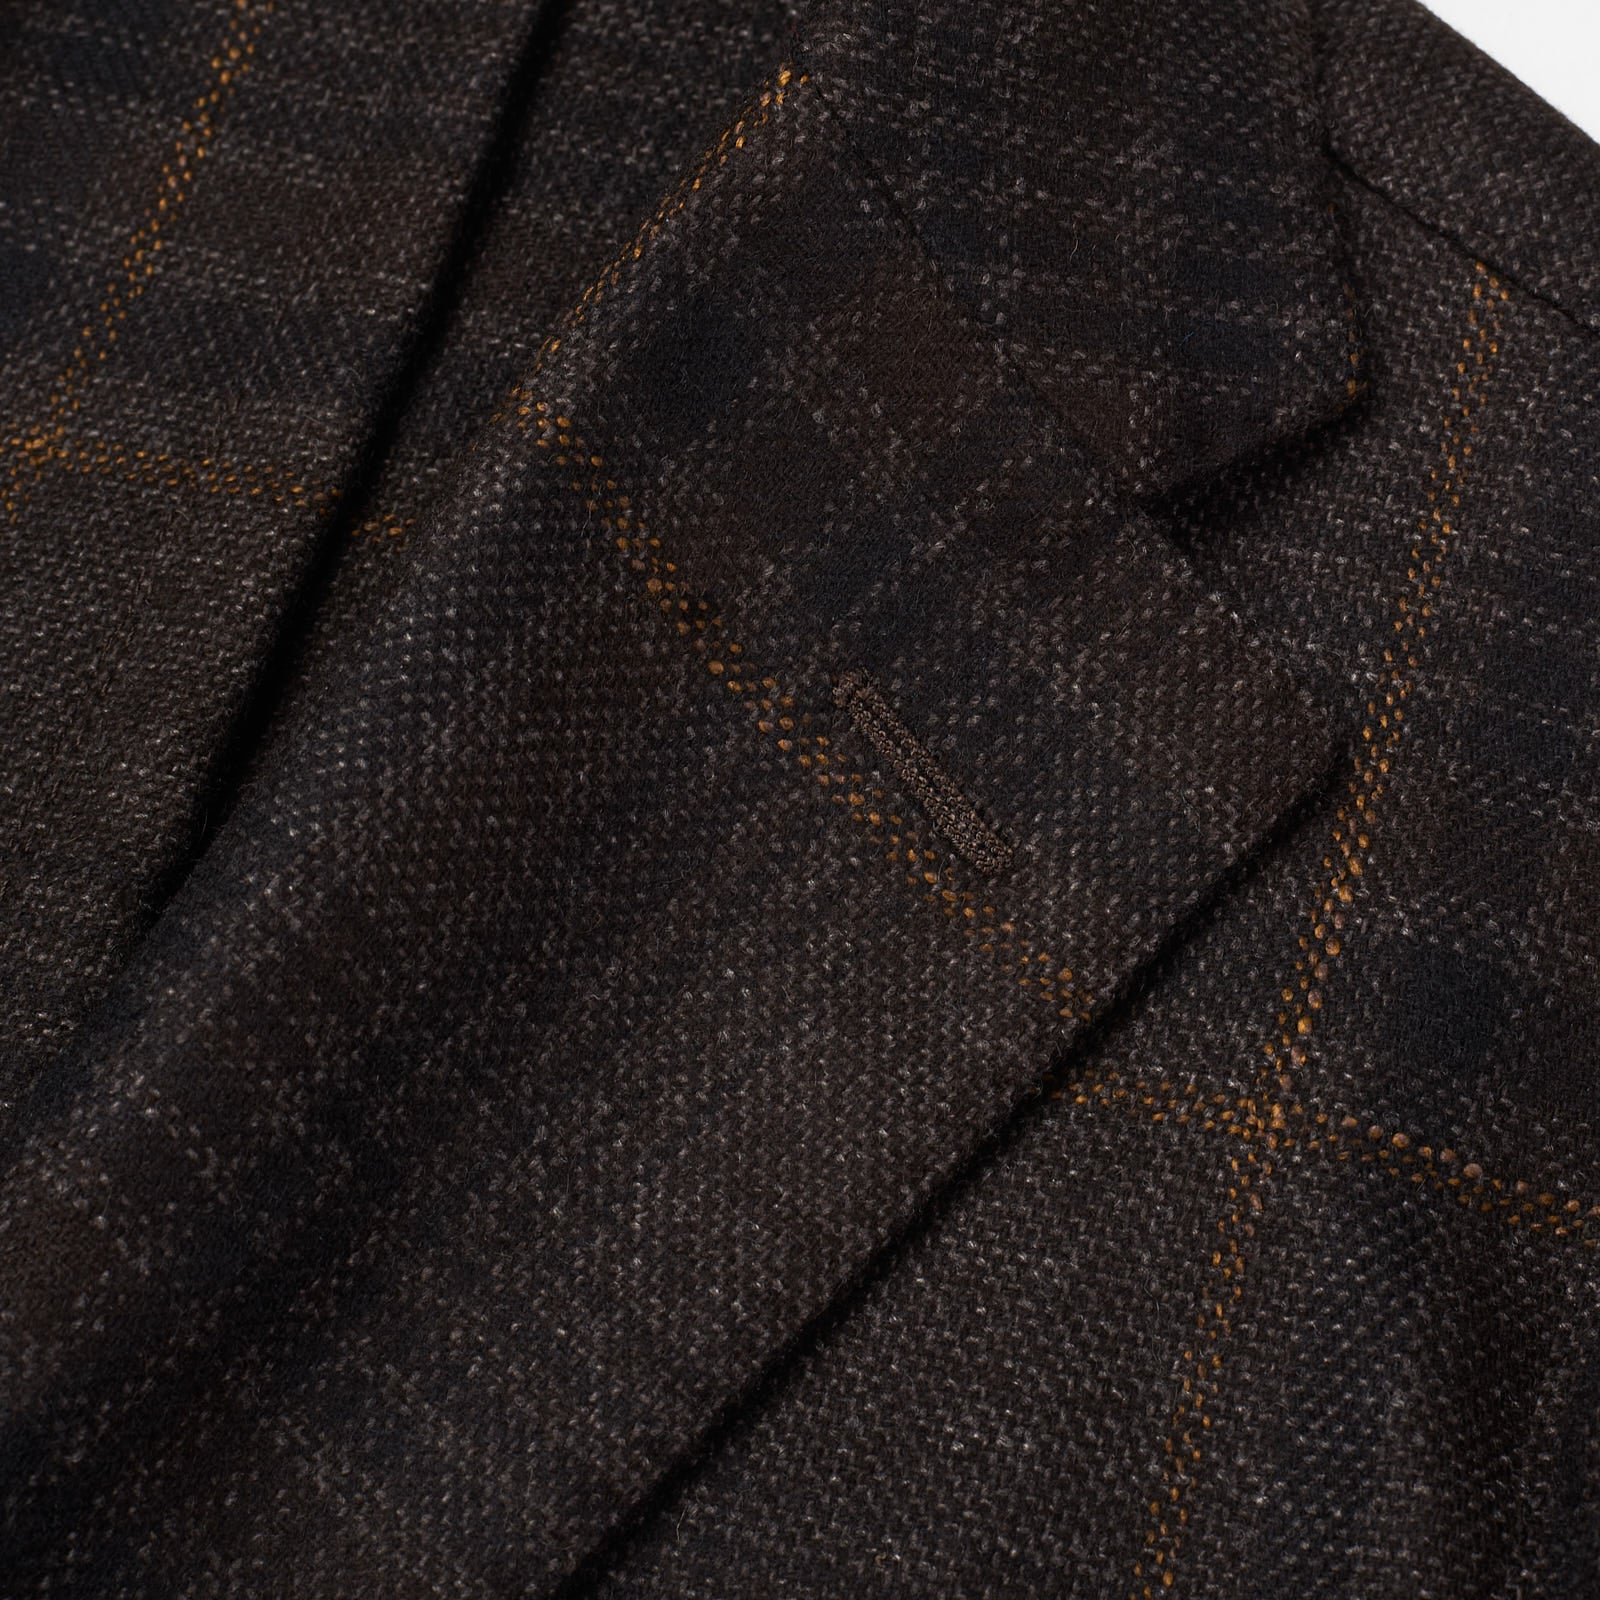 BOGLIOLI Milano "K.Jacket" Brown Plaid Wool-Cashmere Unlined Jacket EU 50 NEW US 40 BOGLIOLI